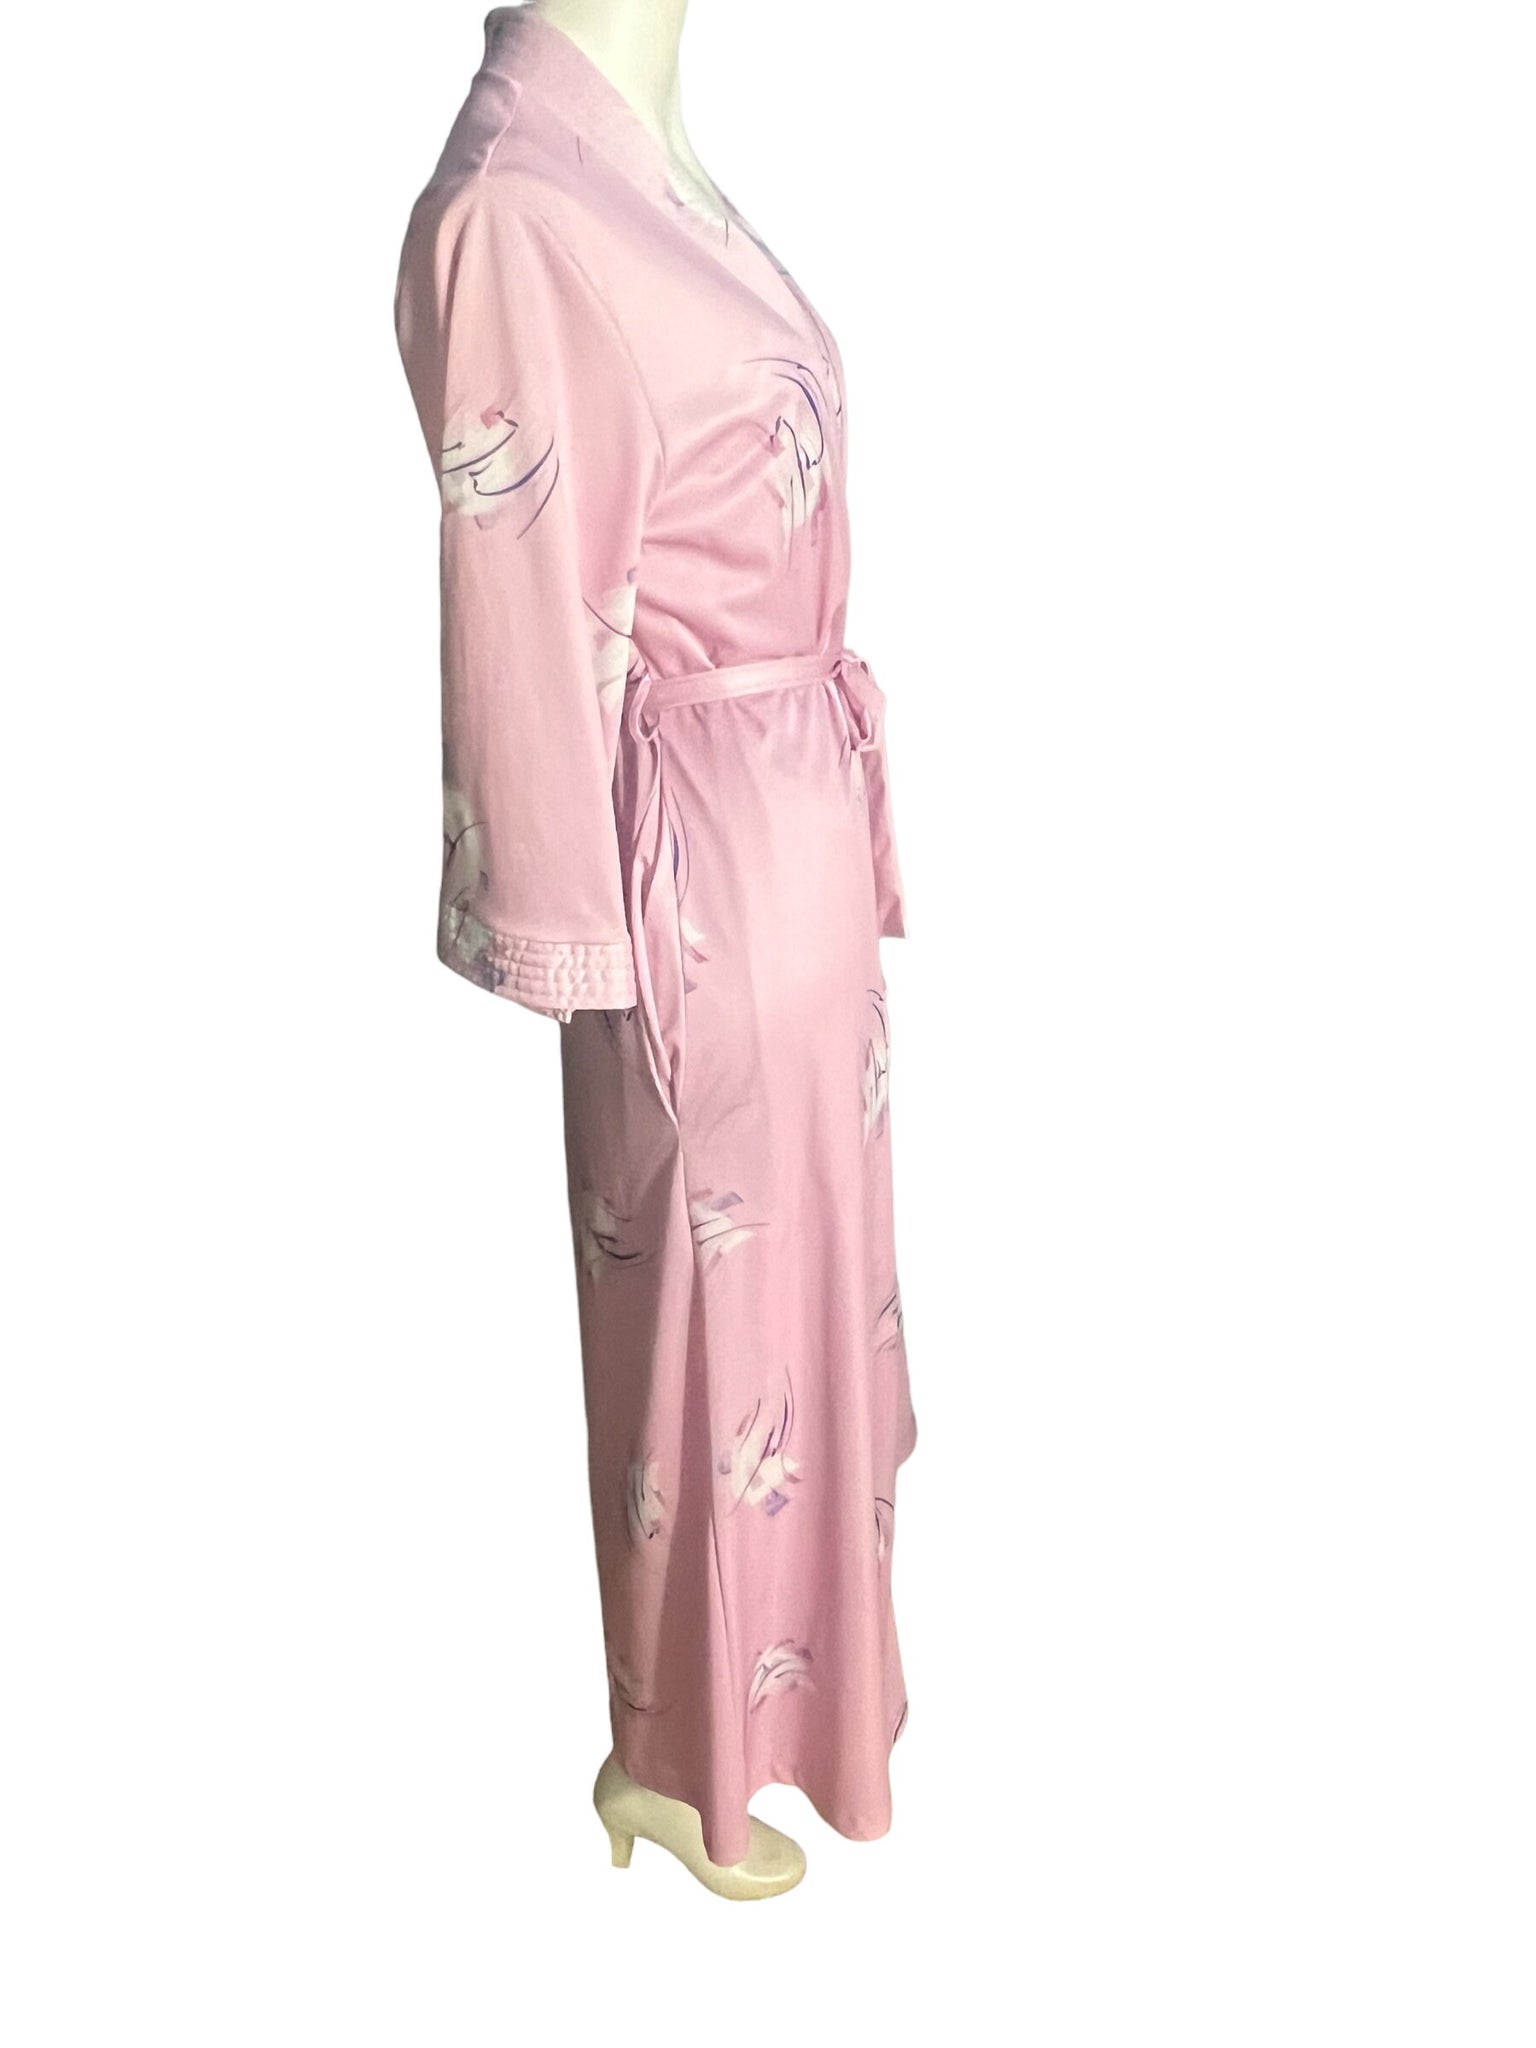 Vintage 80's Avon nightgown & robe L